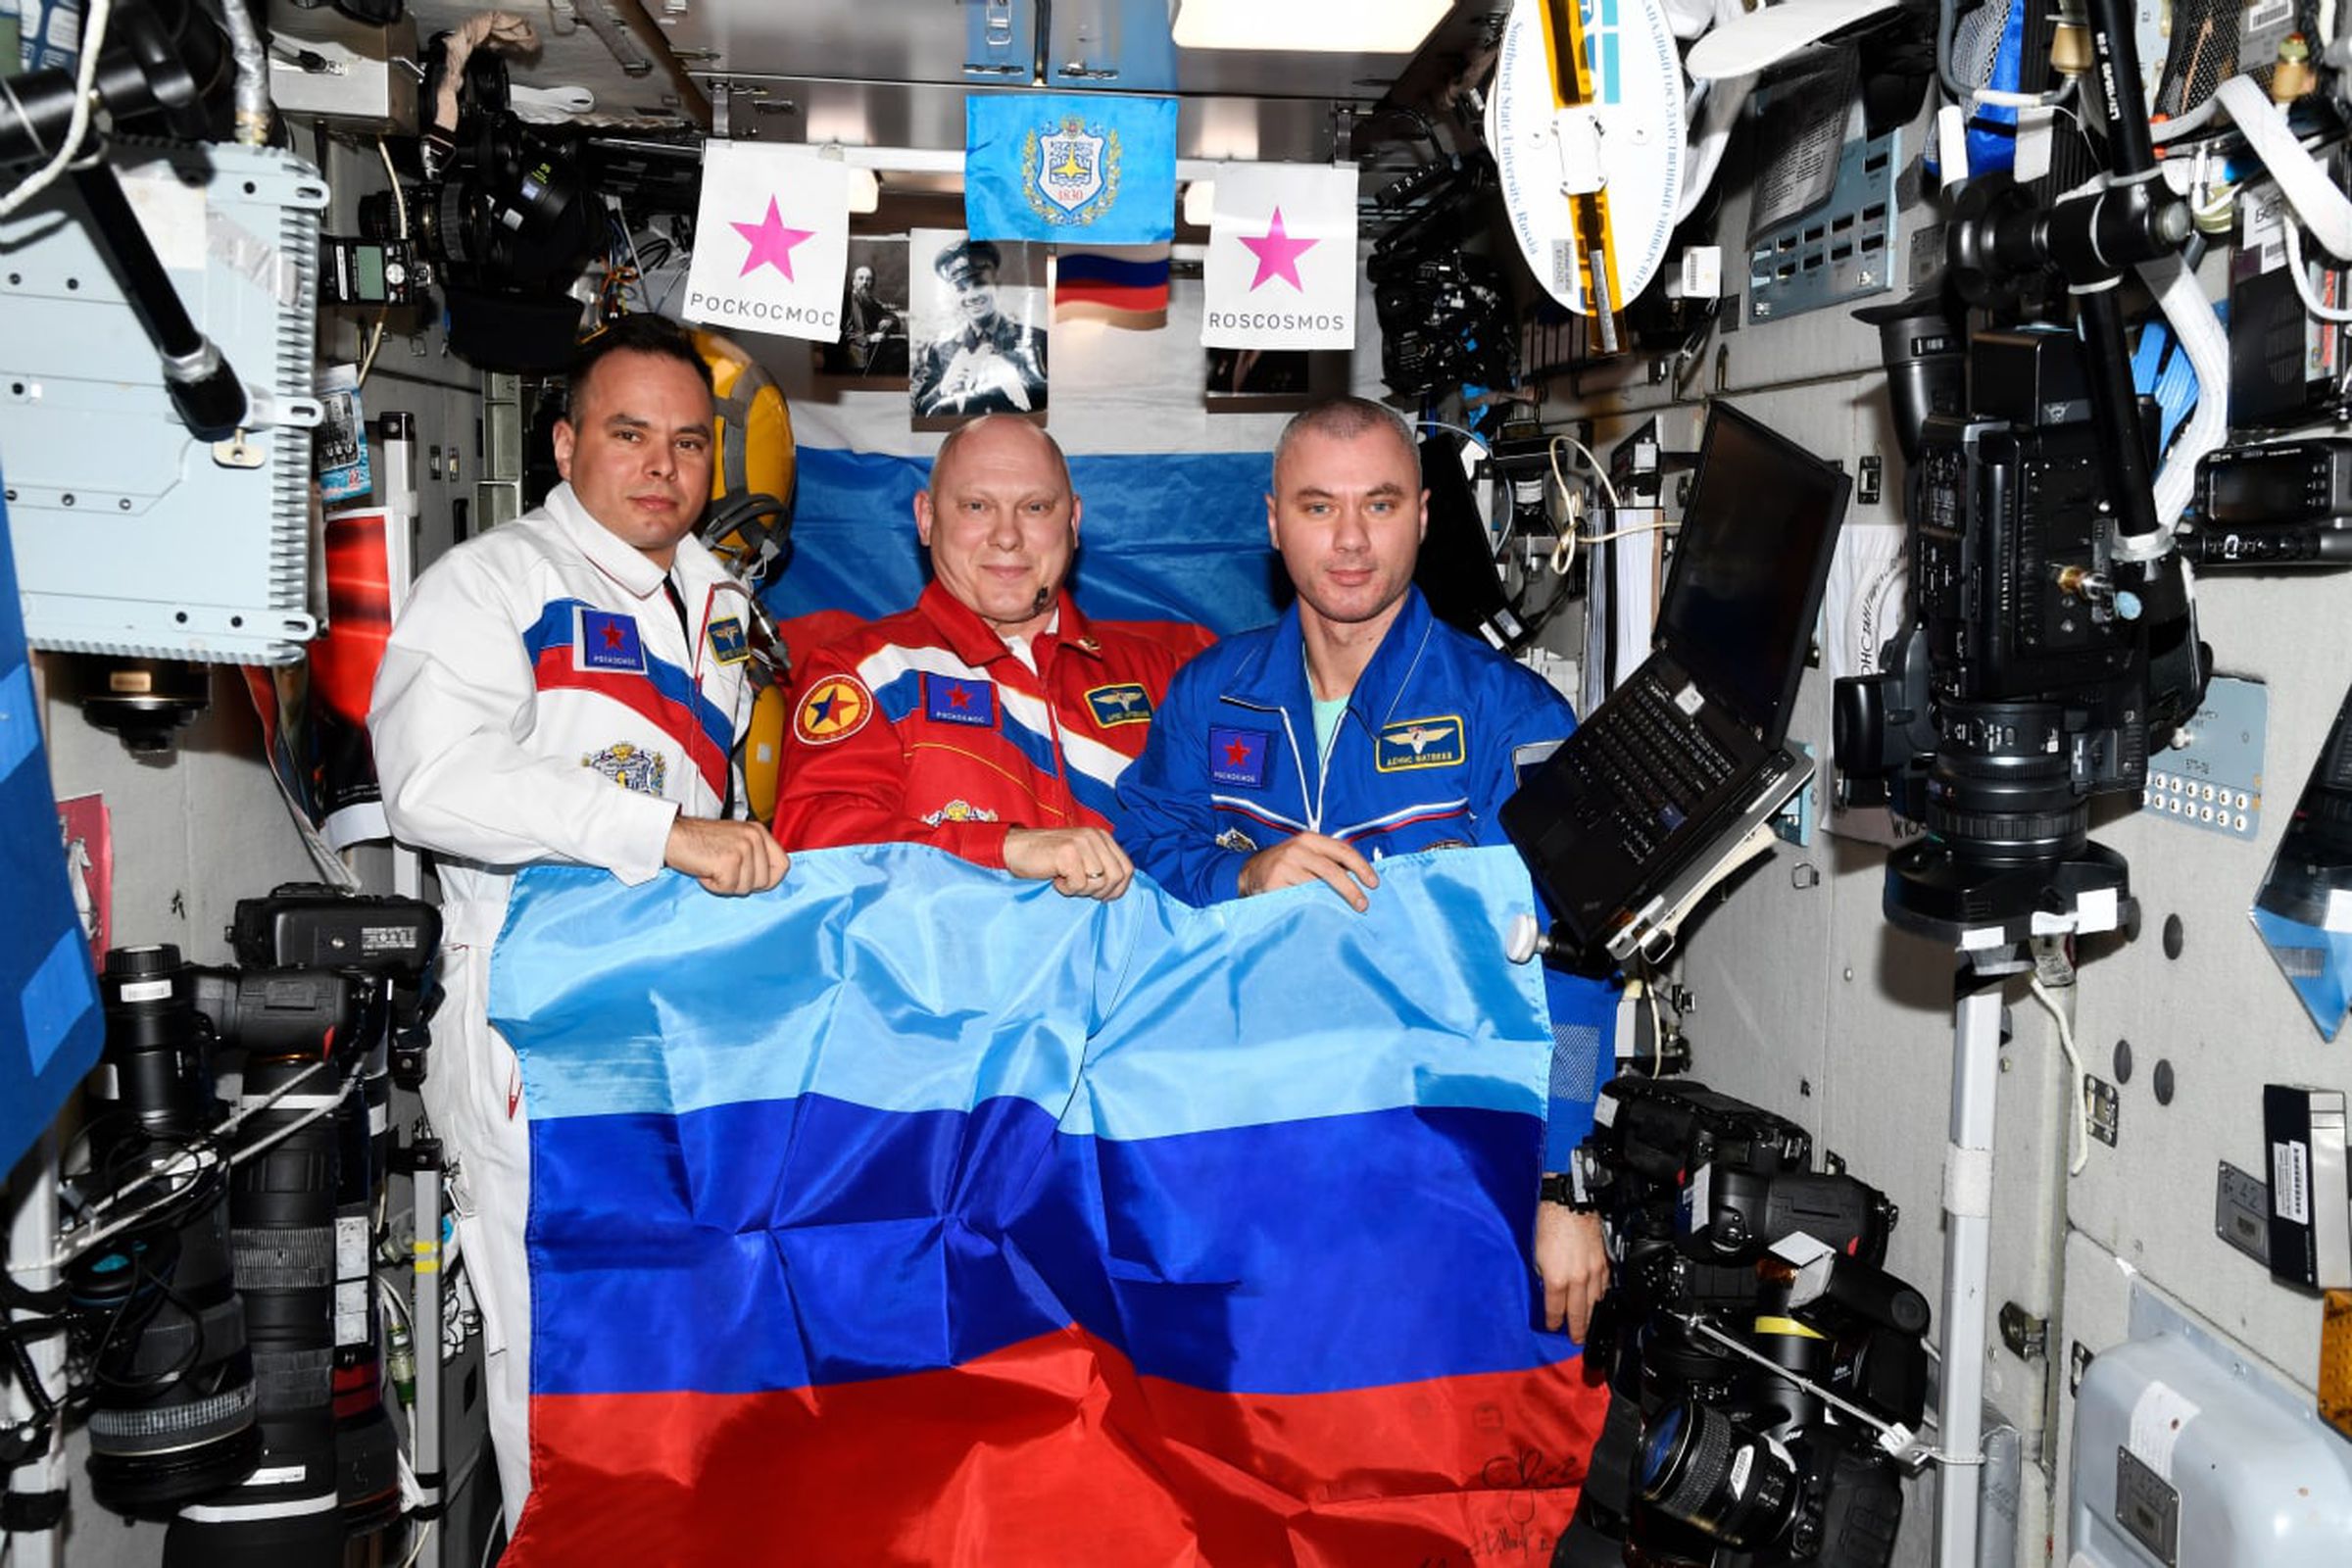 (L to R) Russian cosmonauts Sergey Korsakov, Oleg Artemyev, and Denis Matveev pose with the flag of the Luhansk People’s Republic